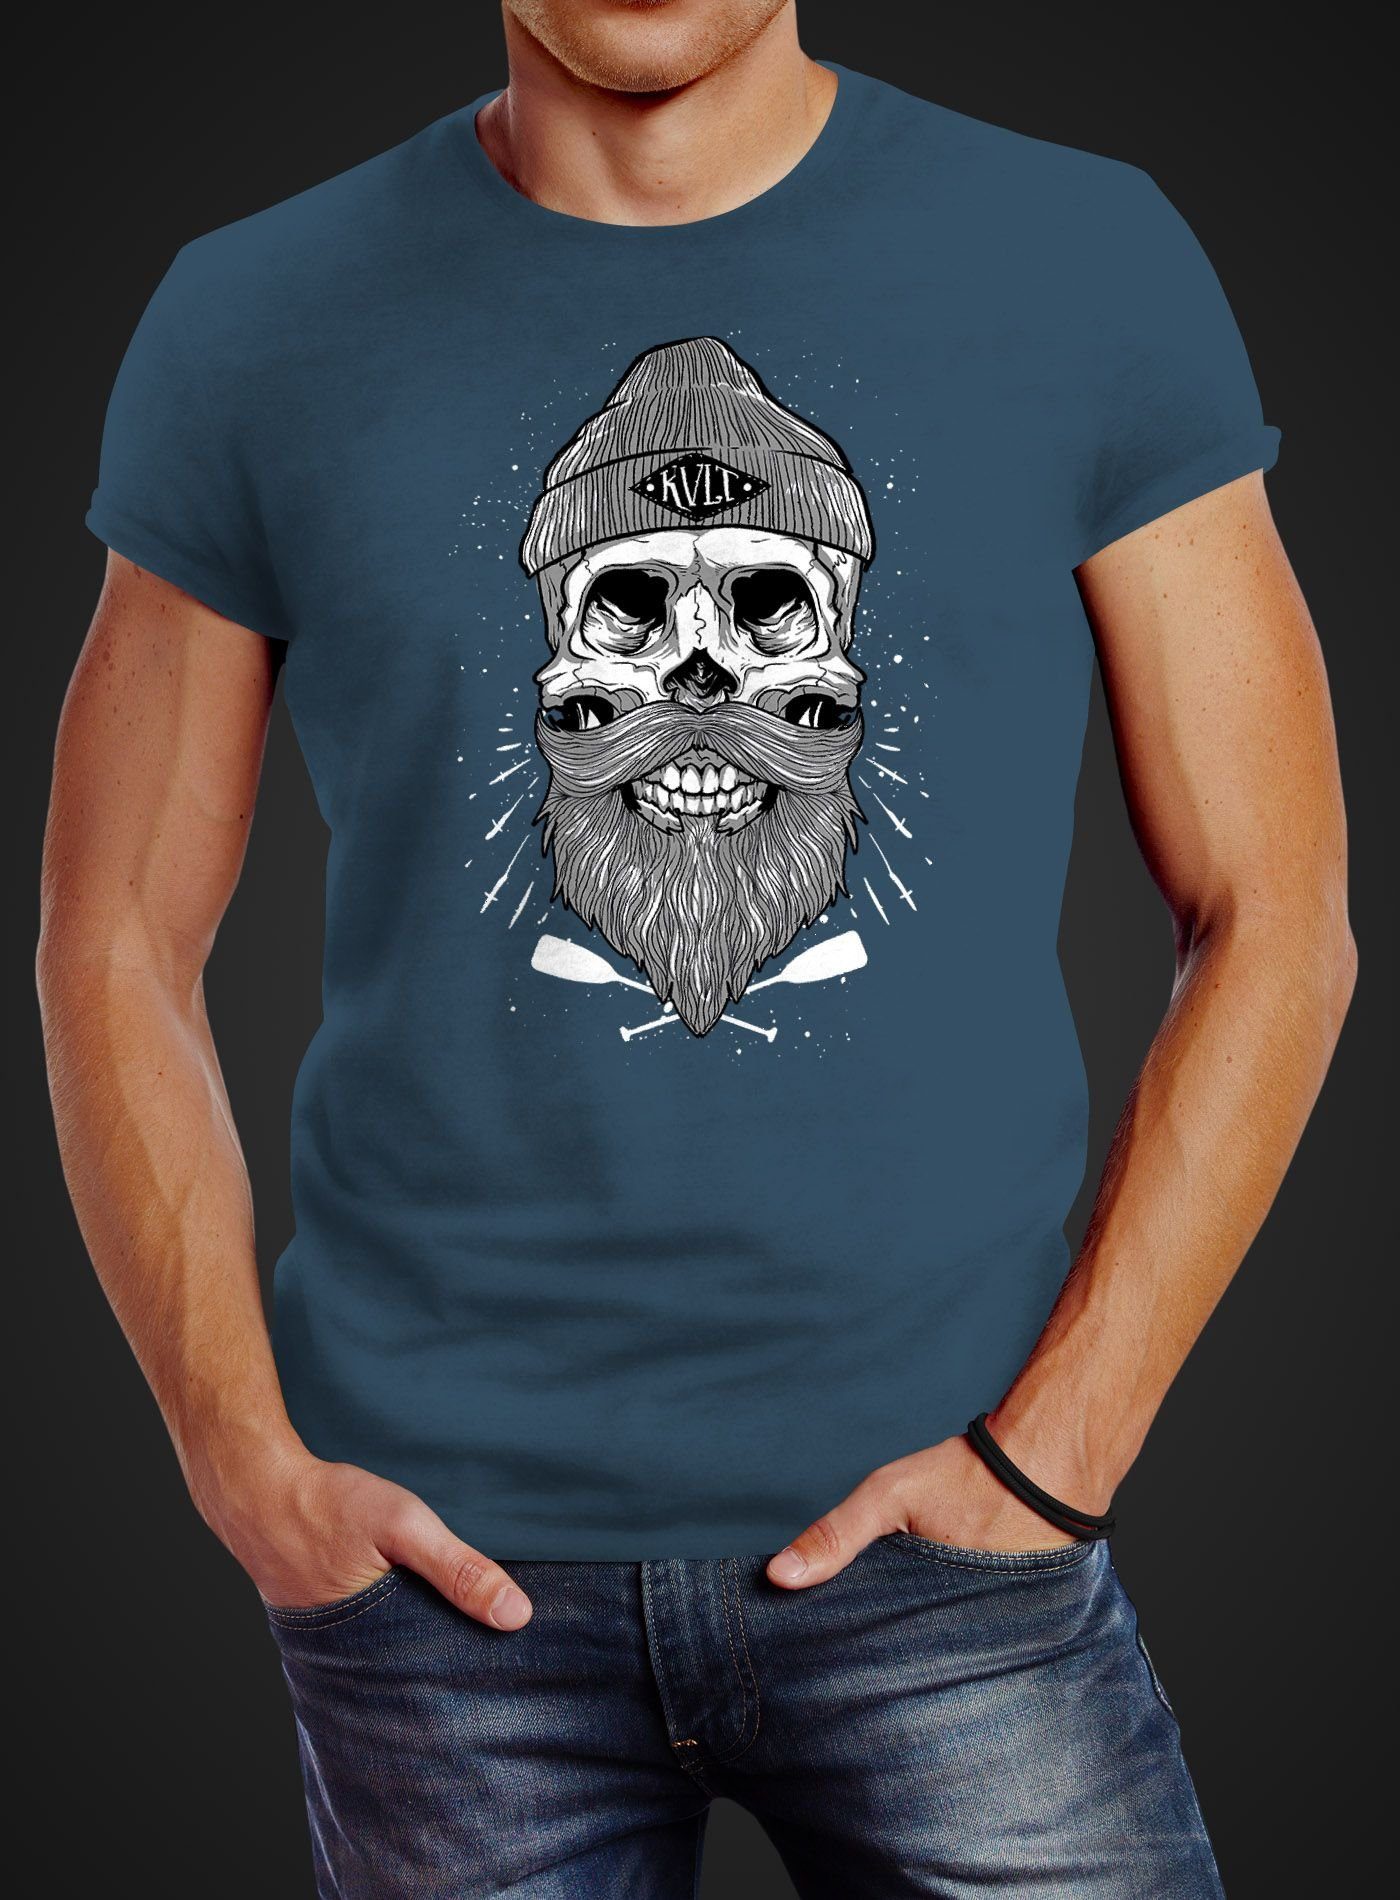 Totenkopf Neverless blau T-Shirt Herren Print Fit Captain Slim Bart Print-Shirt Beard Kapitän Neverless® mit Skull